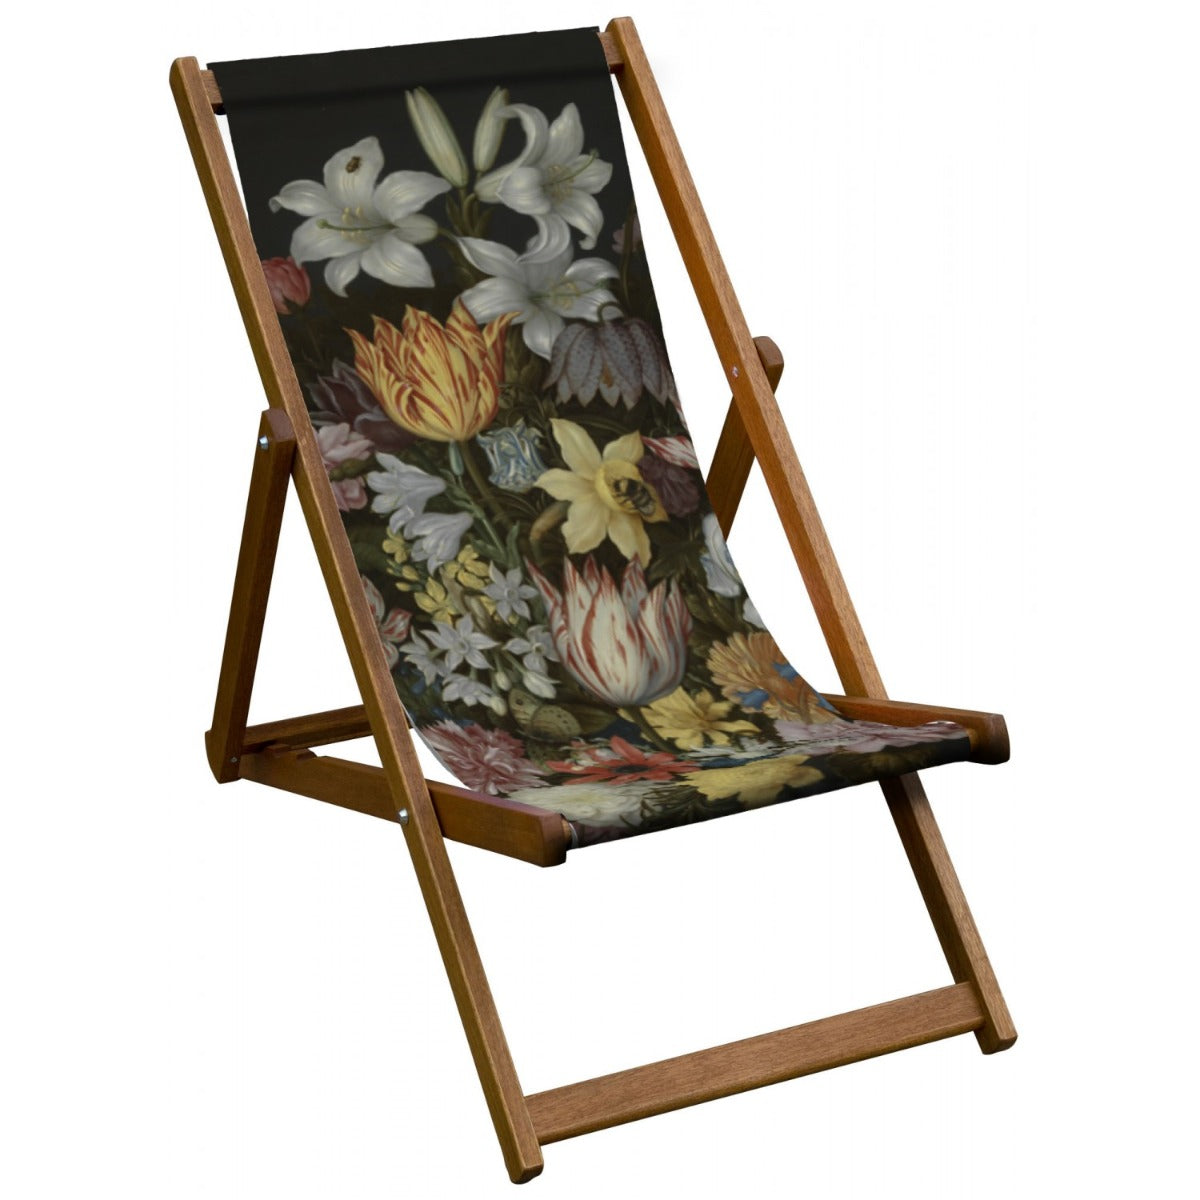 Vintage Inspired Wooden Deckchair- A Still Life fo Flowers- Ambrosius Bosschaert the Elder